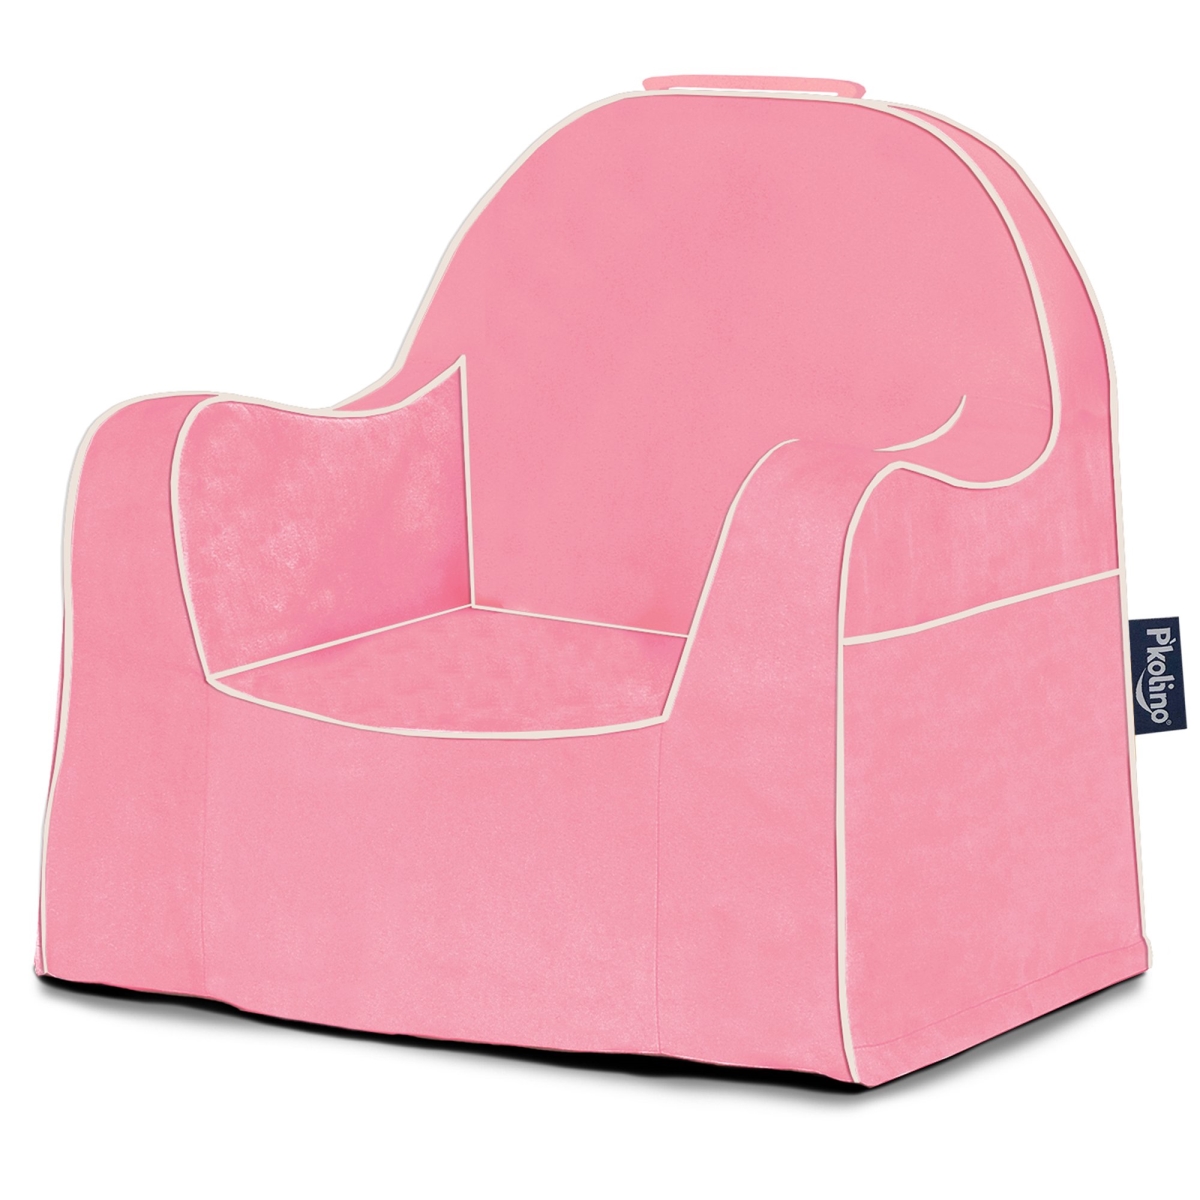 Pkfflrslpk Little Reader Chair - Light Pink With White Piping - 17.75 X 16 X 18 In.